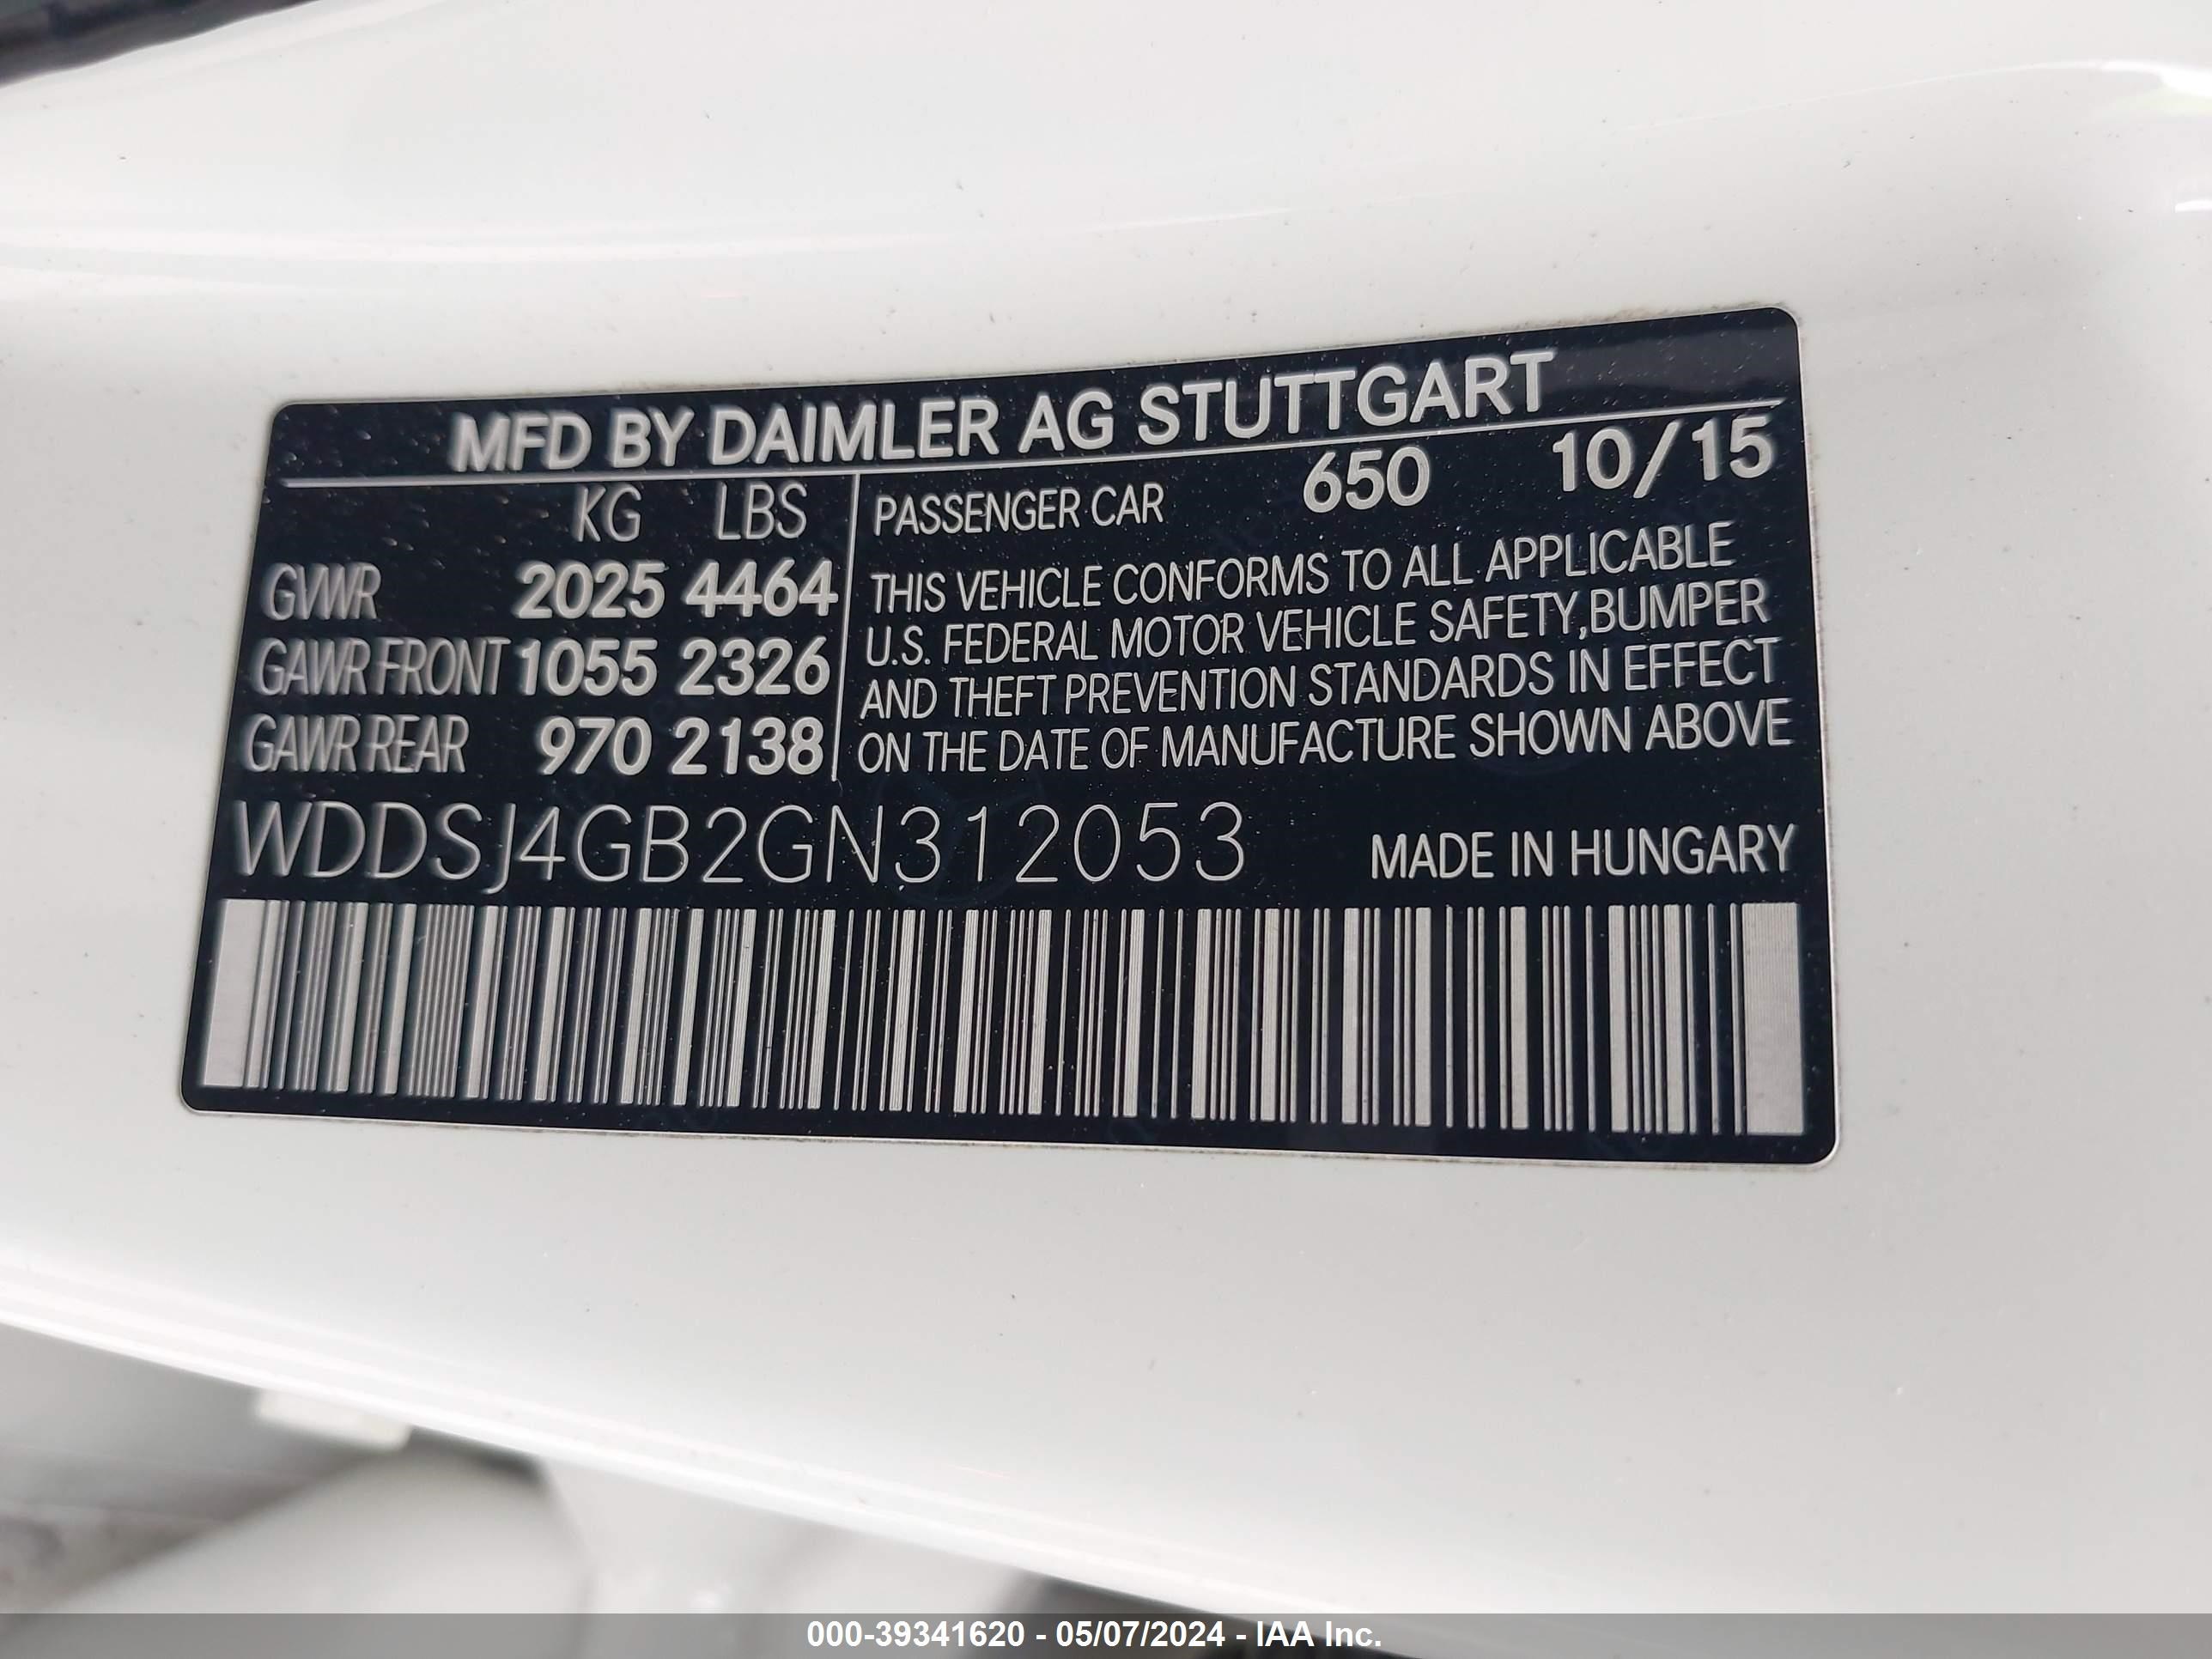 WDDSJ4GB2GN312053 2016 Mercedes-Benz Cla 250 4Matic